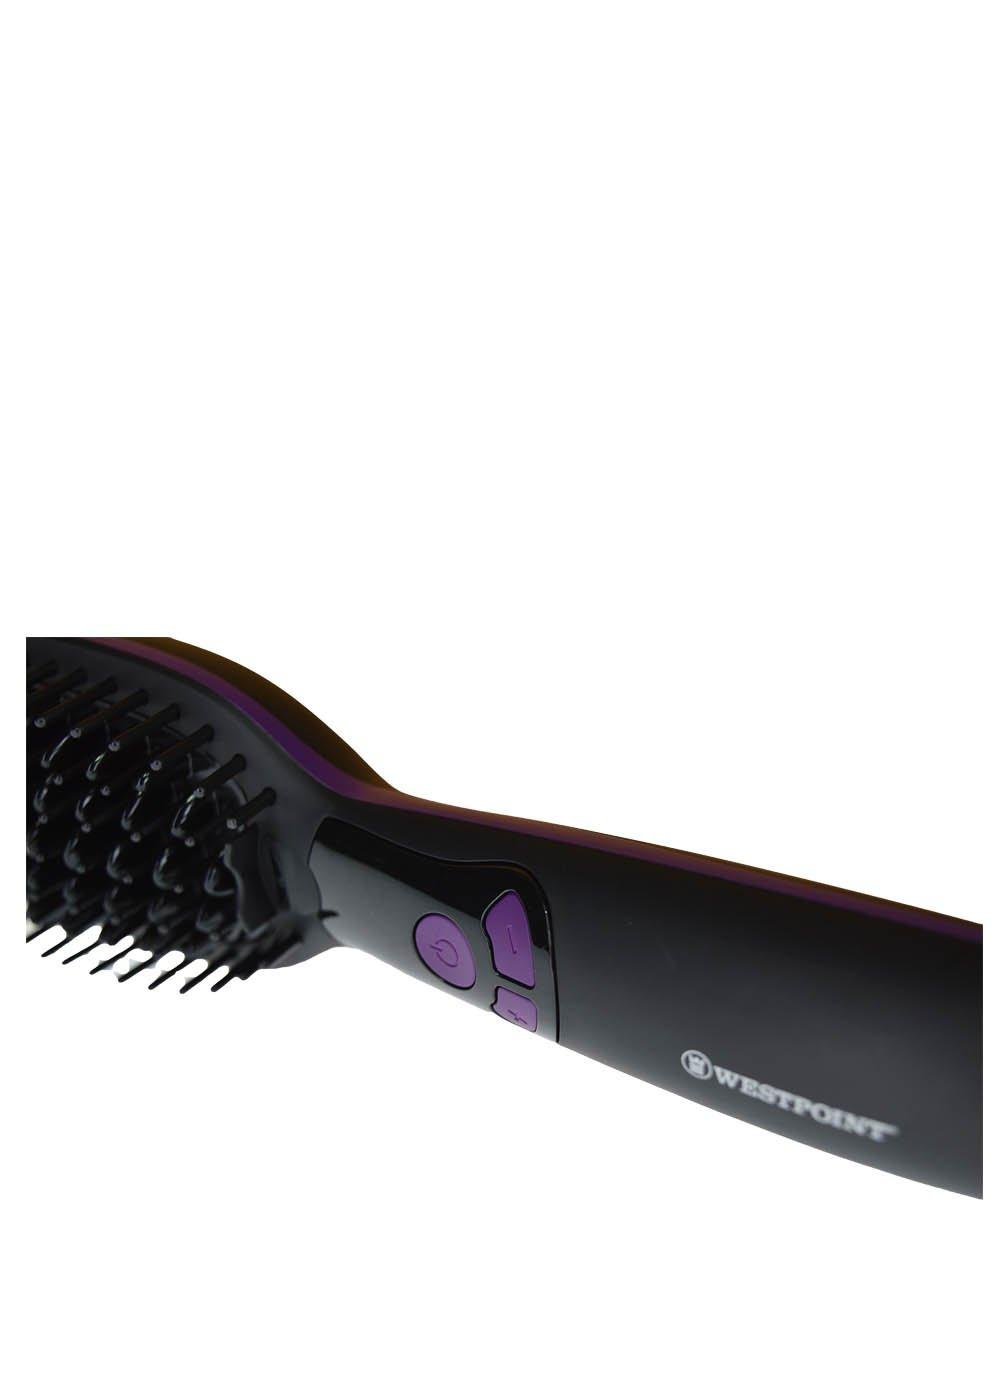 Image result for Westpoint Westpoint Hair Brush (WF-6810)